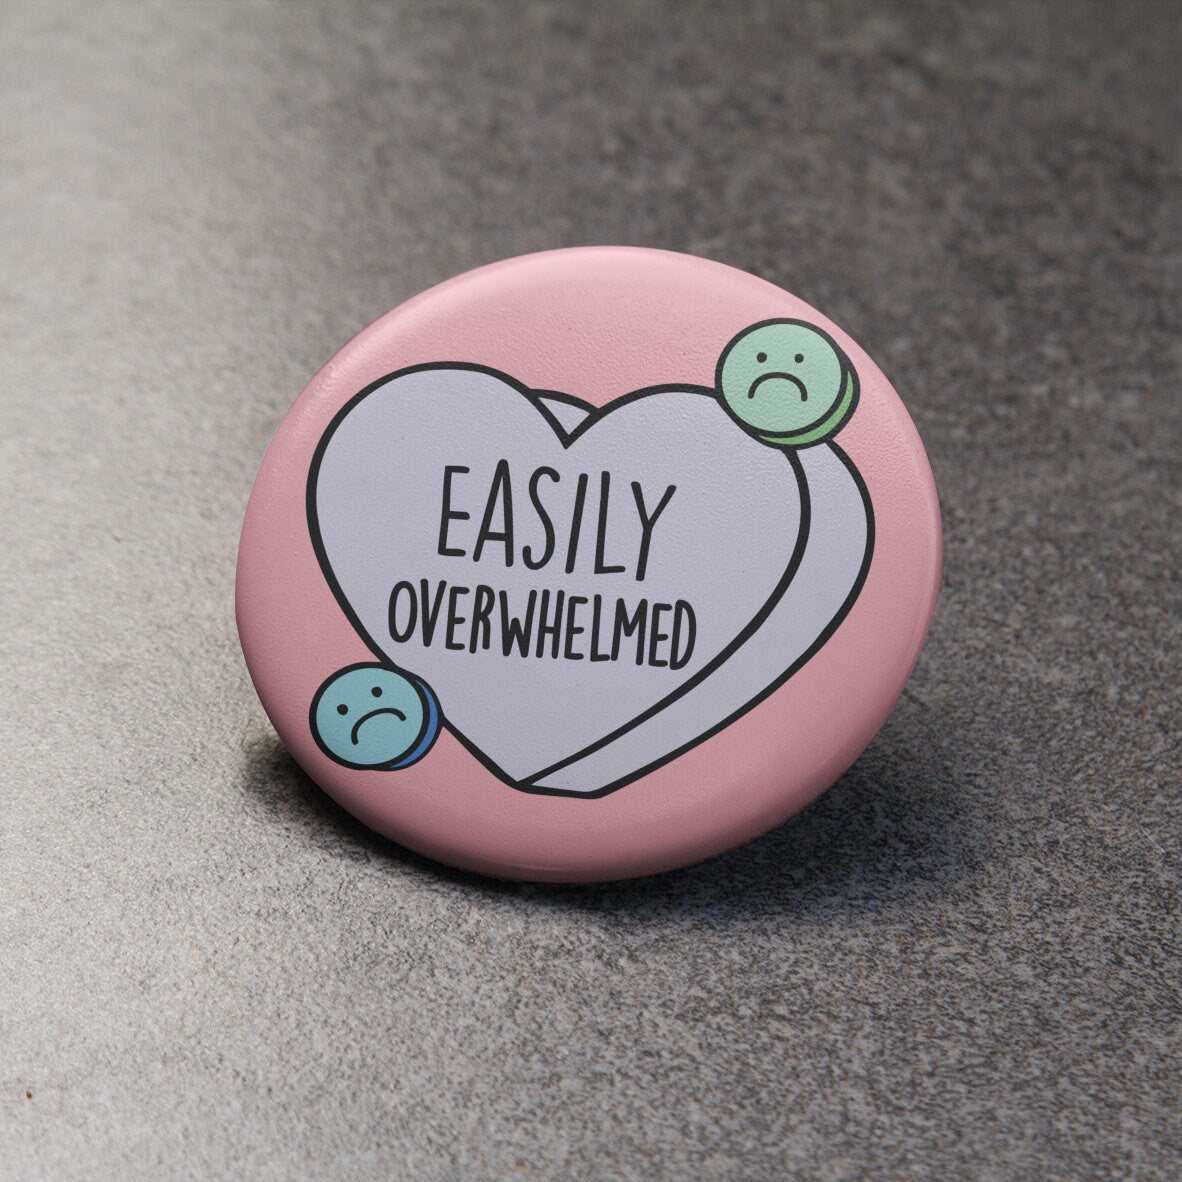 Easily Overwhelmed Heart Badge Pin | Mental Health Badge - Awareness Pin - Hidden Disability Badge